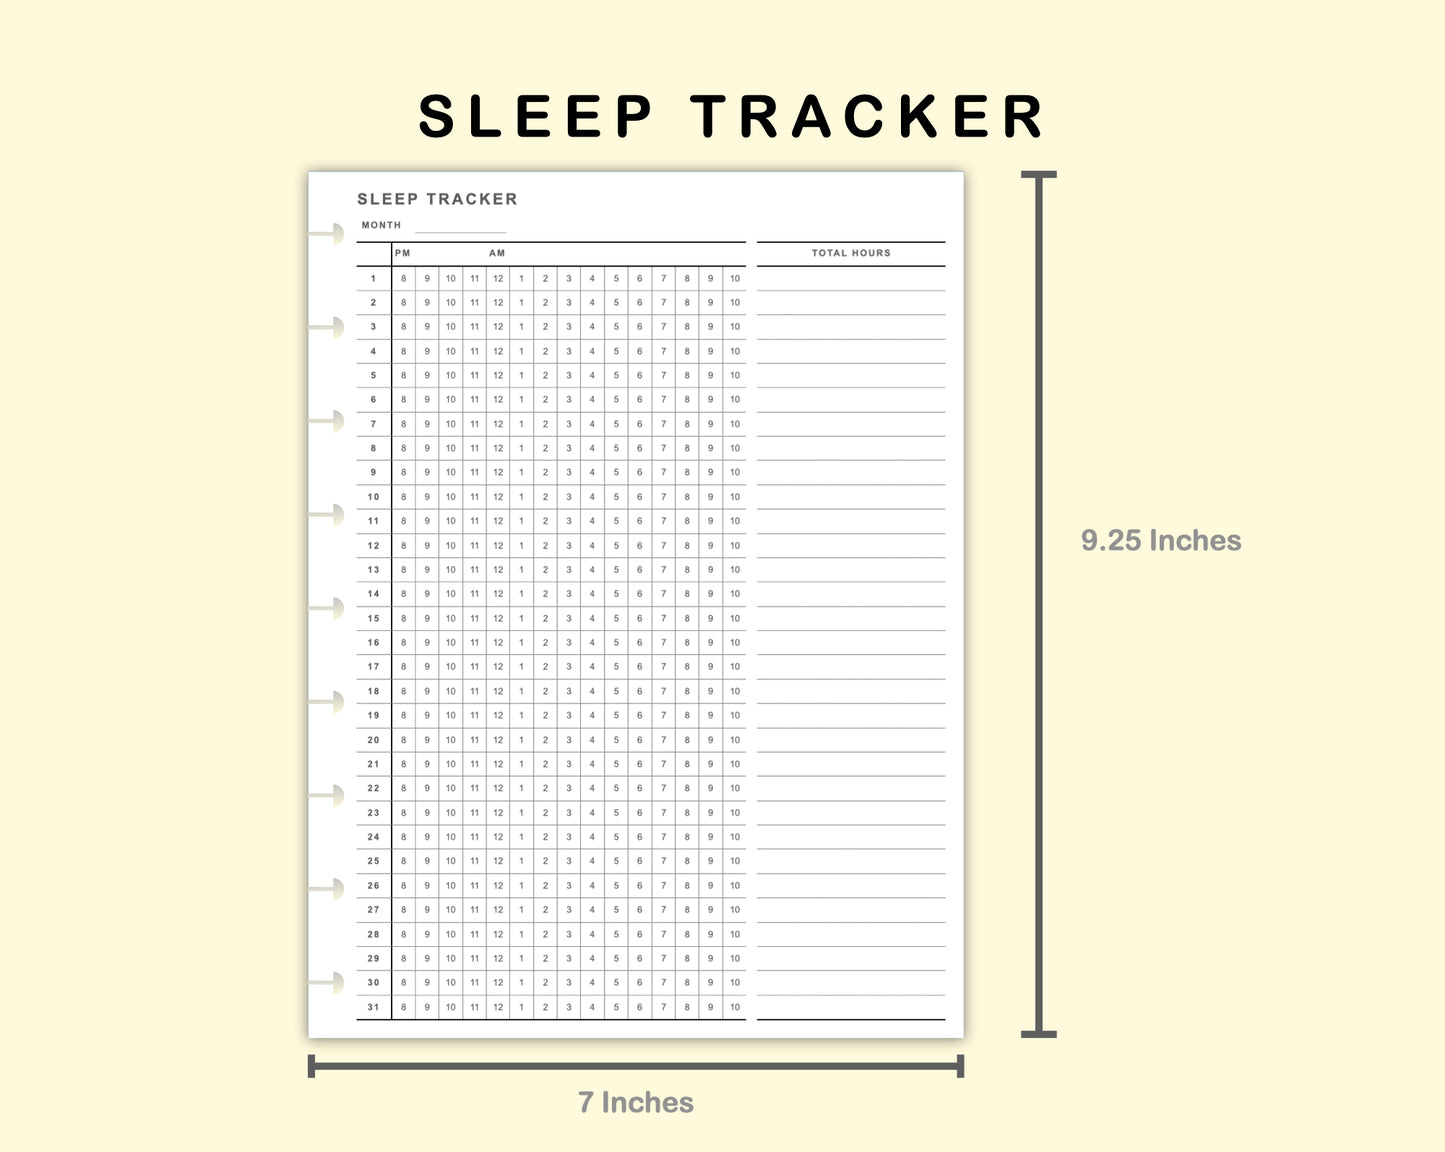 Classic HP Inserts - Sleep Tracker